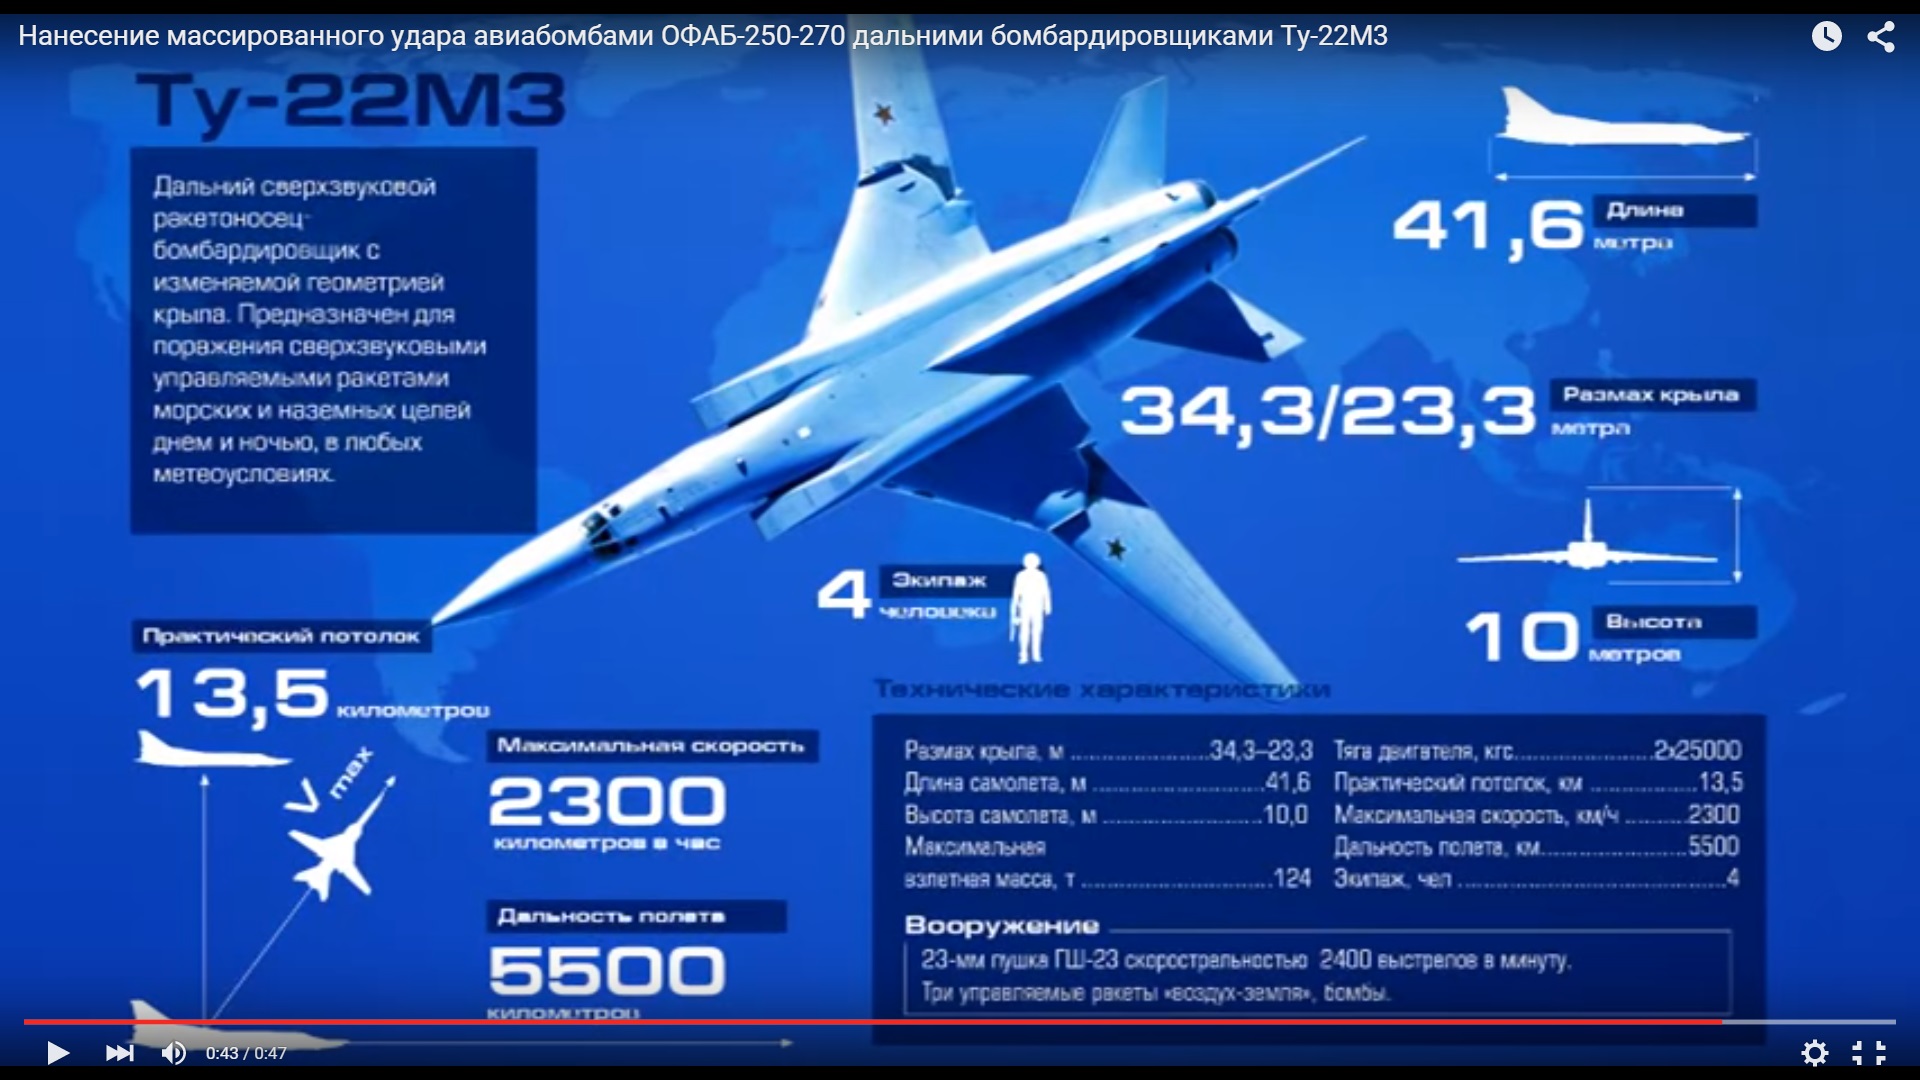 Ту 22 м3 характеристики. Технические характеристики самолета ту 22 м3. Ту-22м3 технические характеристики. Ту-22м3 ТТХ. Сверхзвуковой бомбардировщик ту-22м3 скорость.